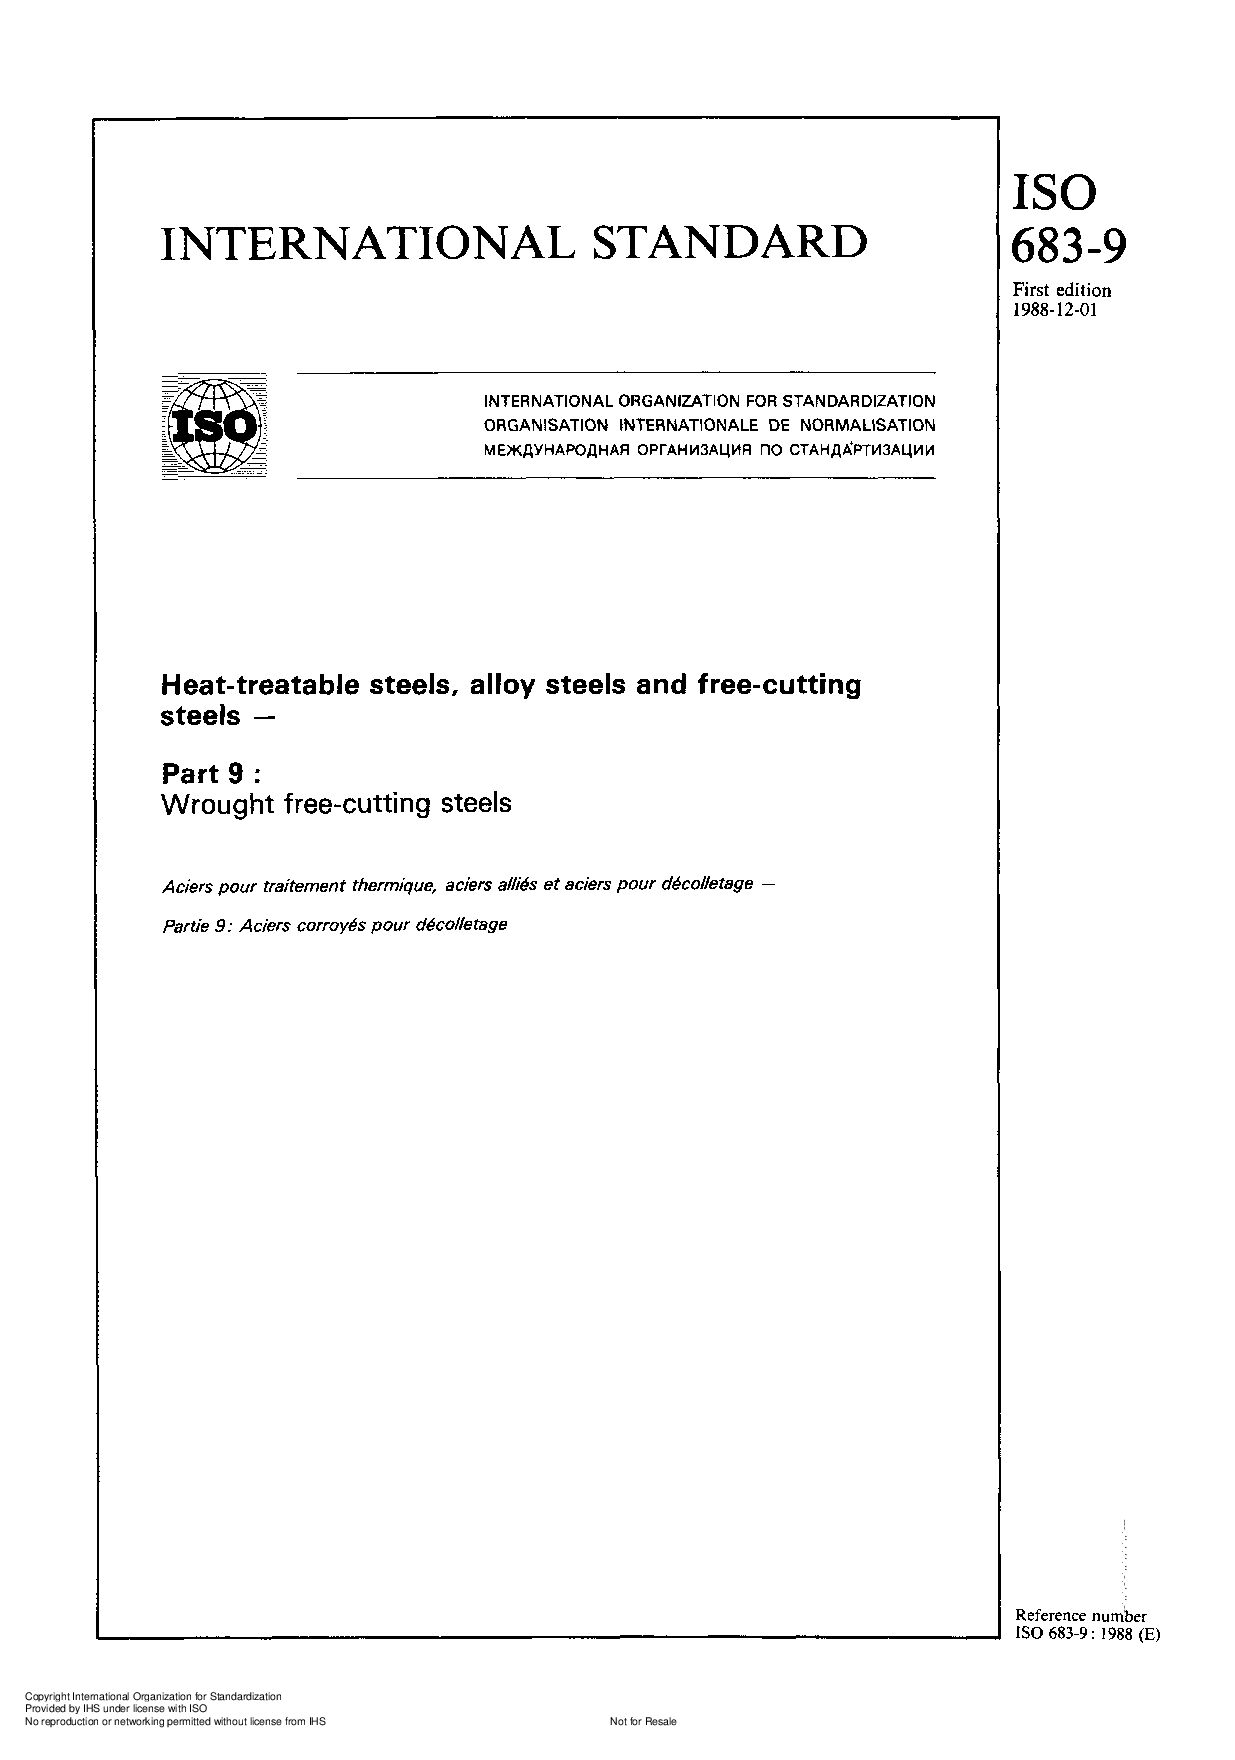 ISO 683-9:1988封面图